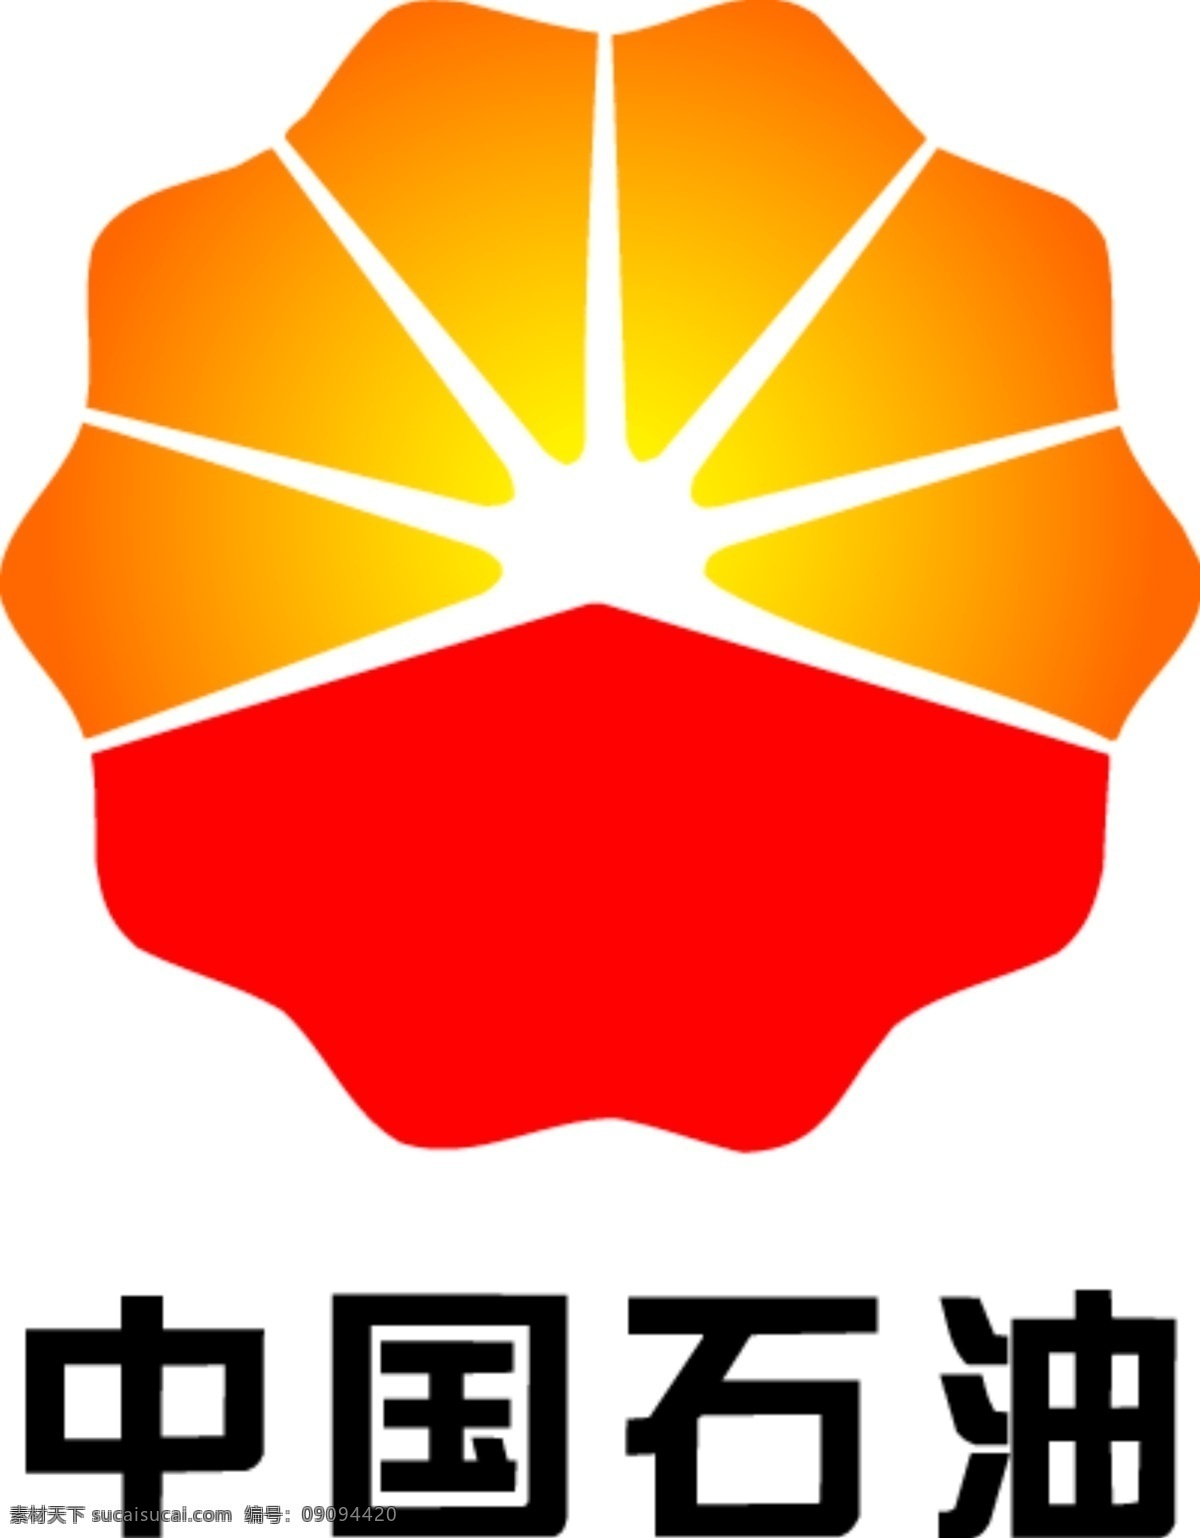 logo psd素材 vi 标准 源文件库 中国石油 中国 石油 中国石油vi 模板下载 标准logo 分层透明图 矢量图 建筑家居